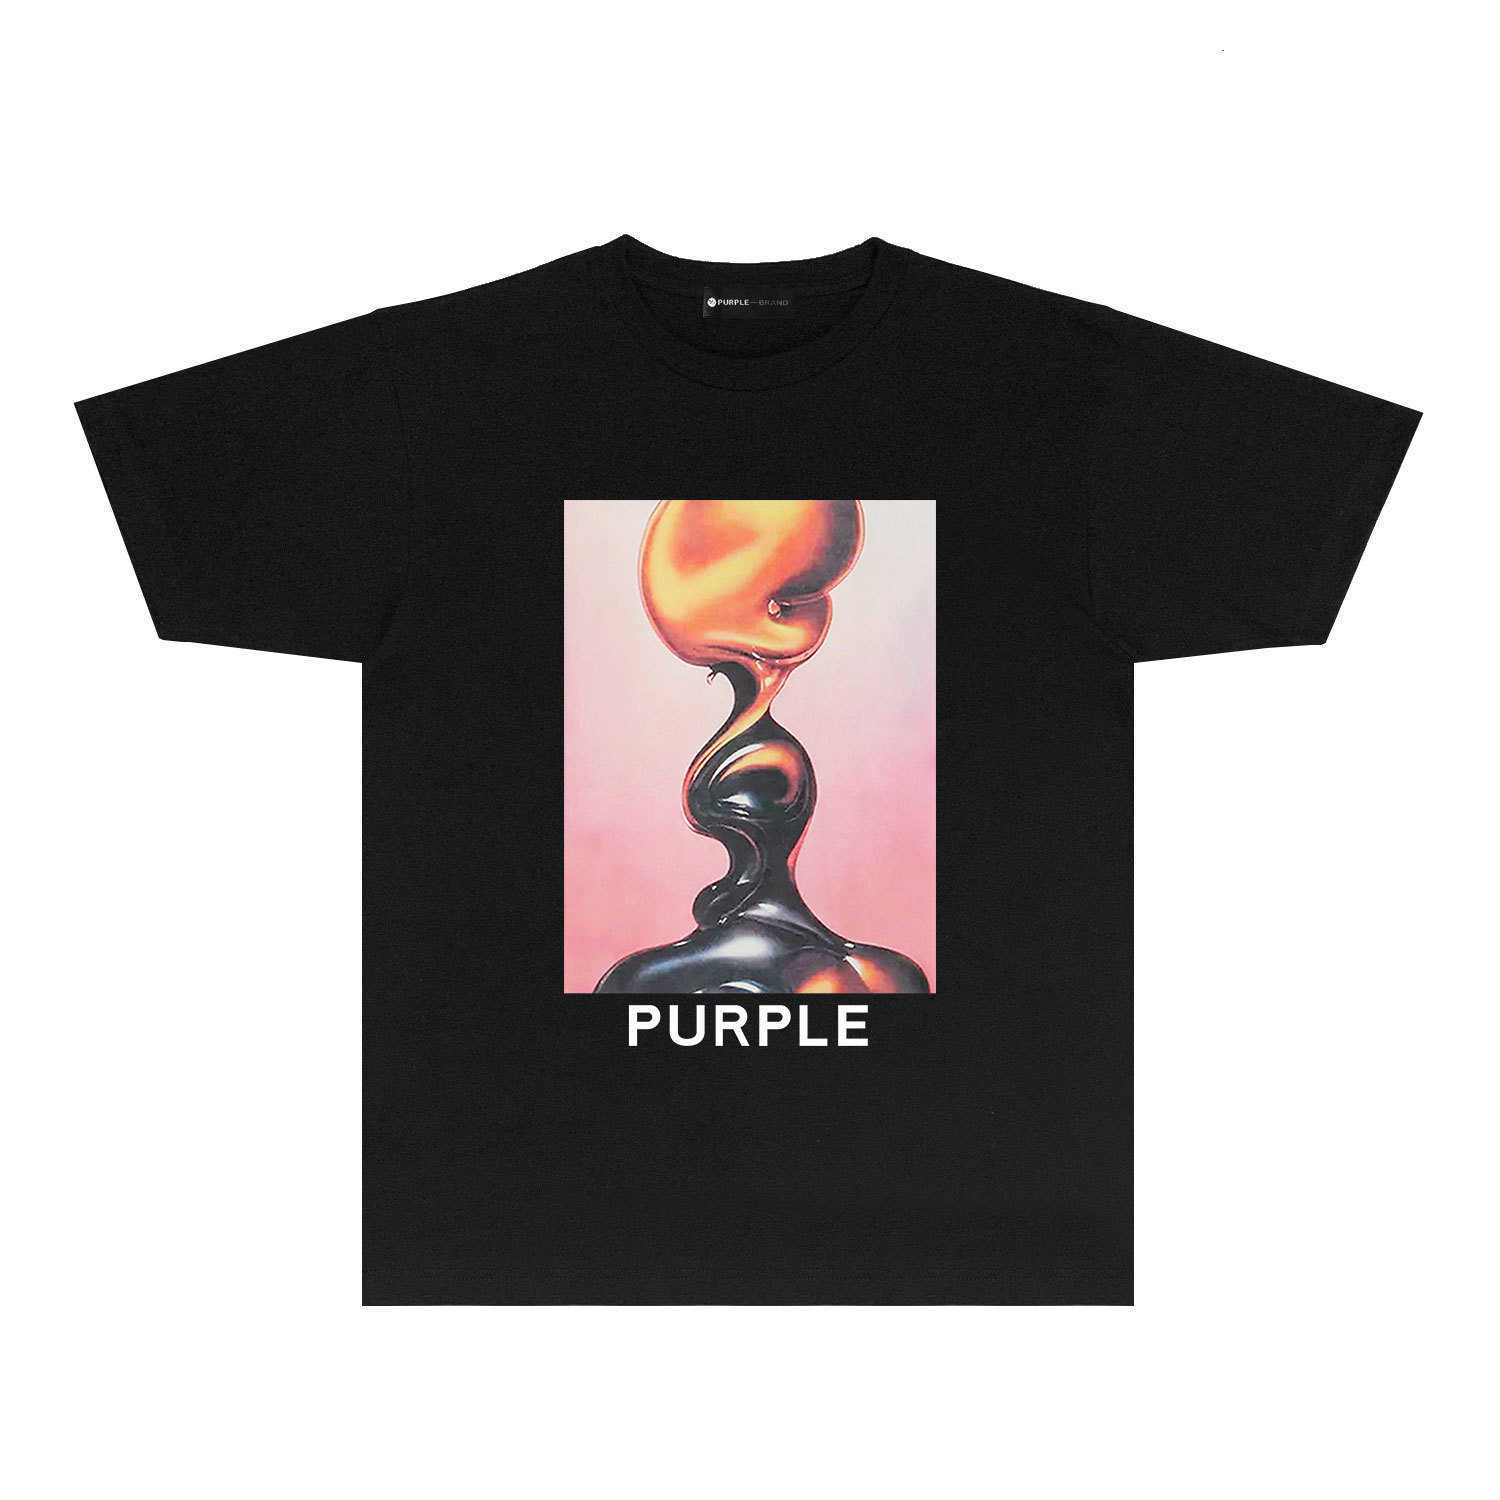 Long term trendy brand PURPLE BRAND T SHIRT short sleeved T-shirt shirtI3TZ